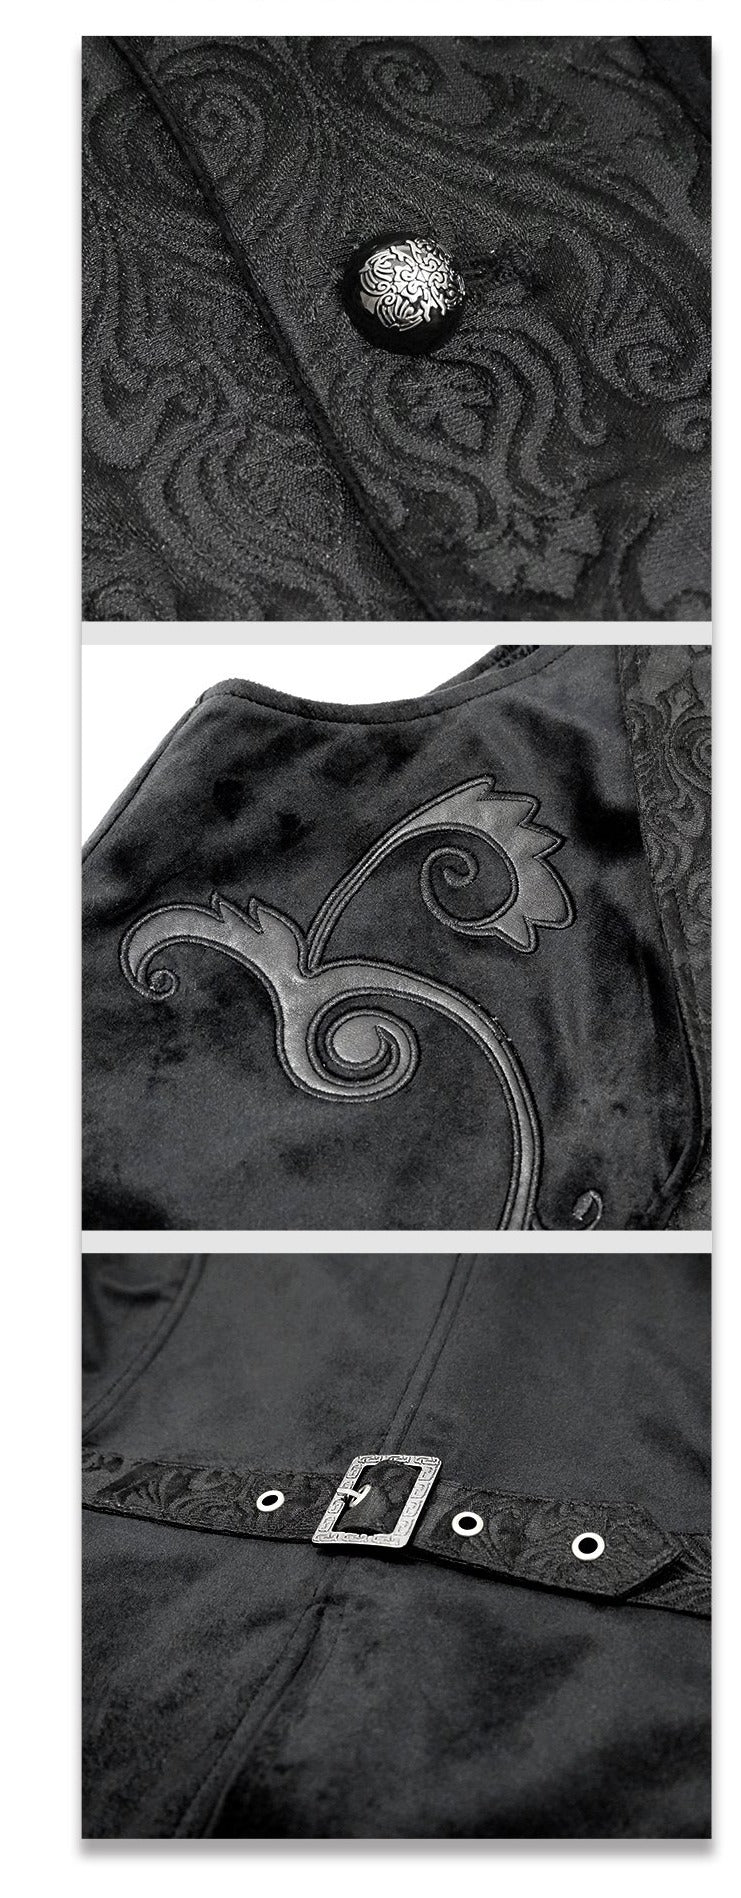 Western Stylish Fake Two Piece Palace Leather Embroidery Gothic Men Velvet Waistcoats